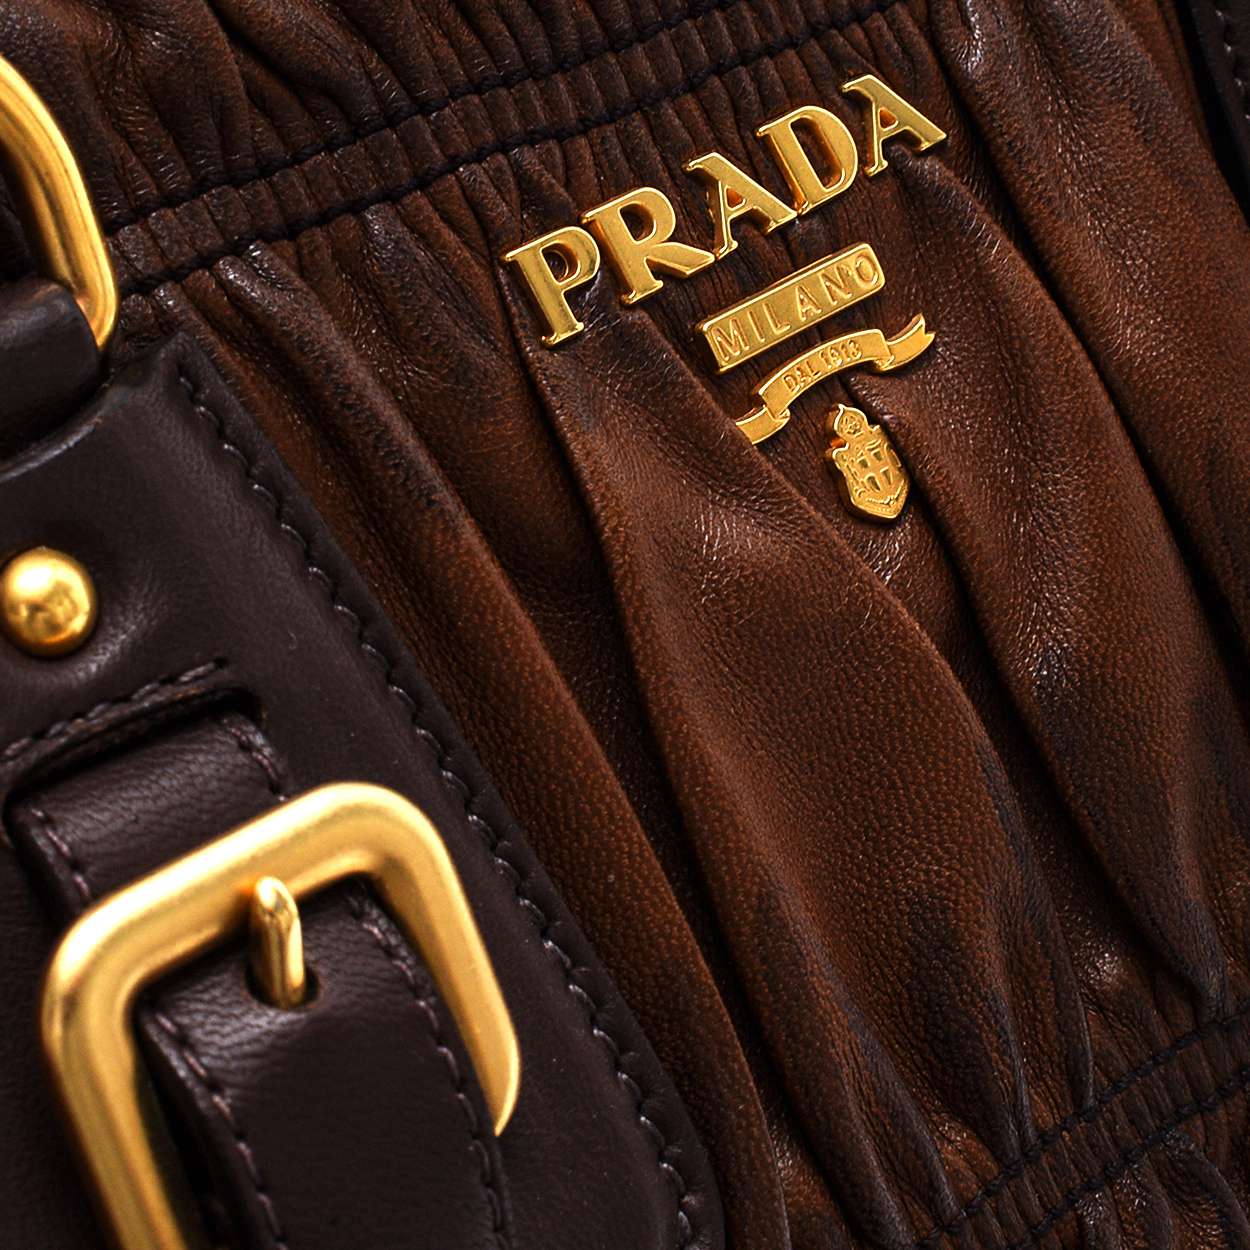 Prada - Brown  Gaufree Leather Tophandle Bag